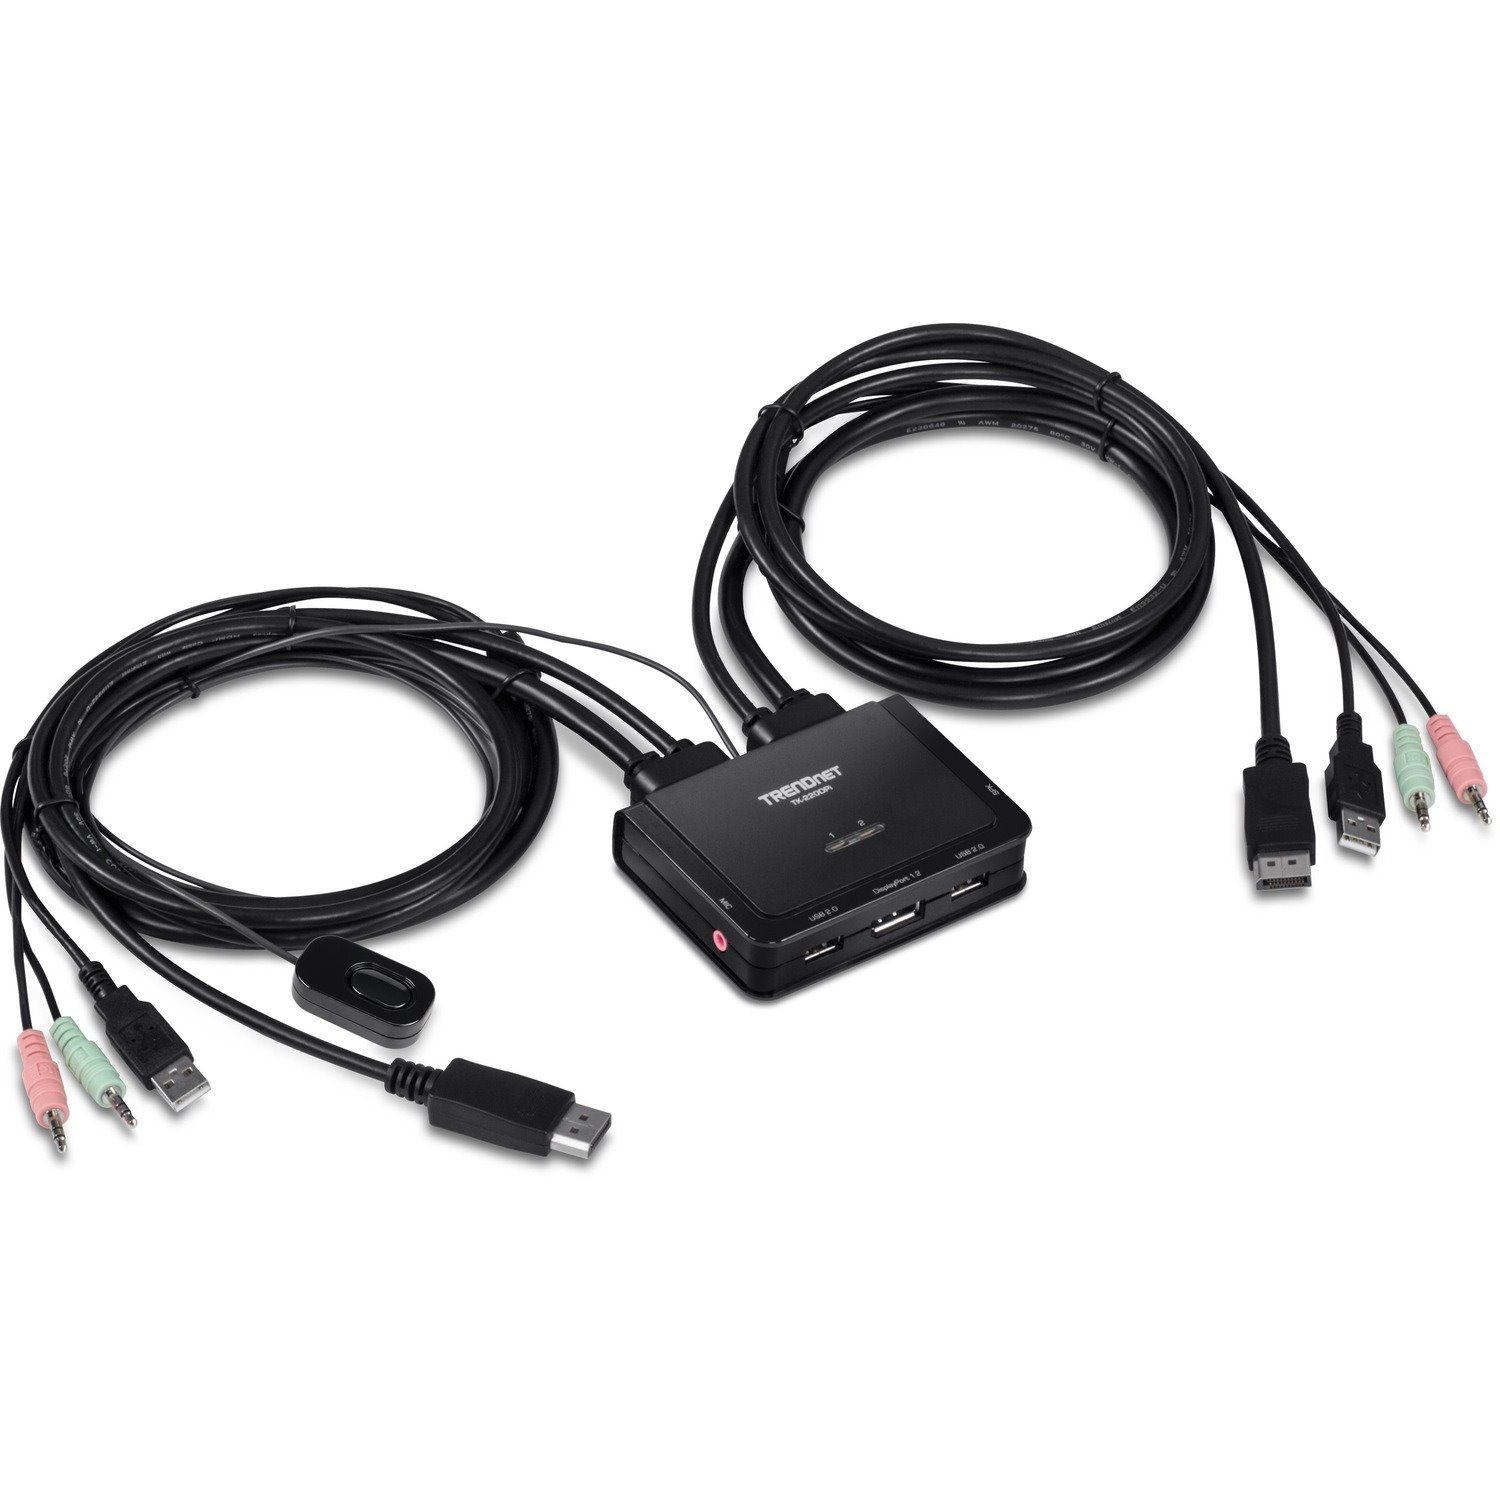 TRENDnet 2-Port 4K DisplayPort 1.2 KVM Switch with Audio, 4K UHD (3840 x 2160@60Hz), 3.5mm Speaker/Microphone, USB 2.0, Integrated Cables, Black, TK-220DPI